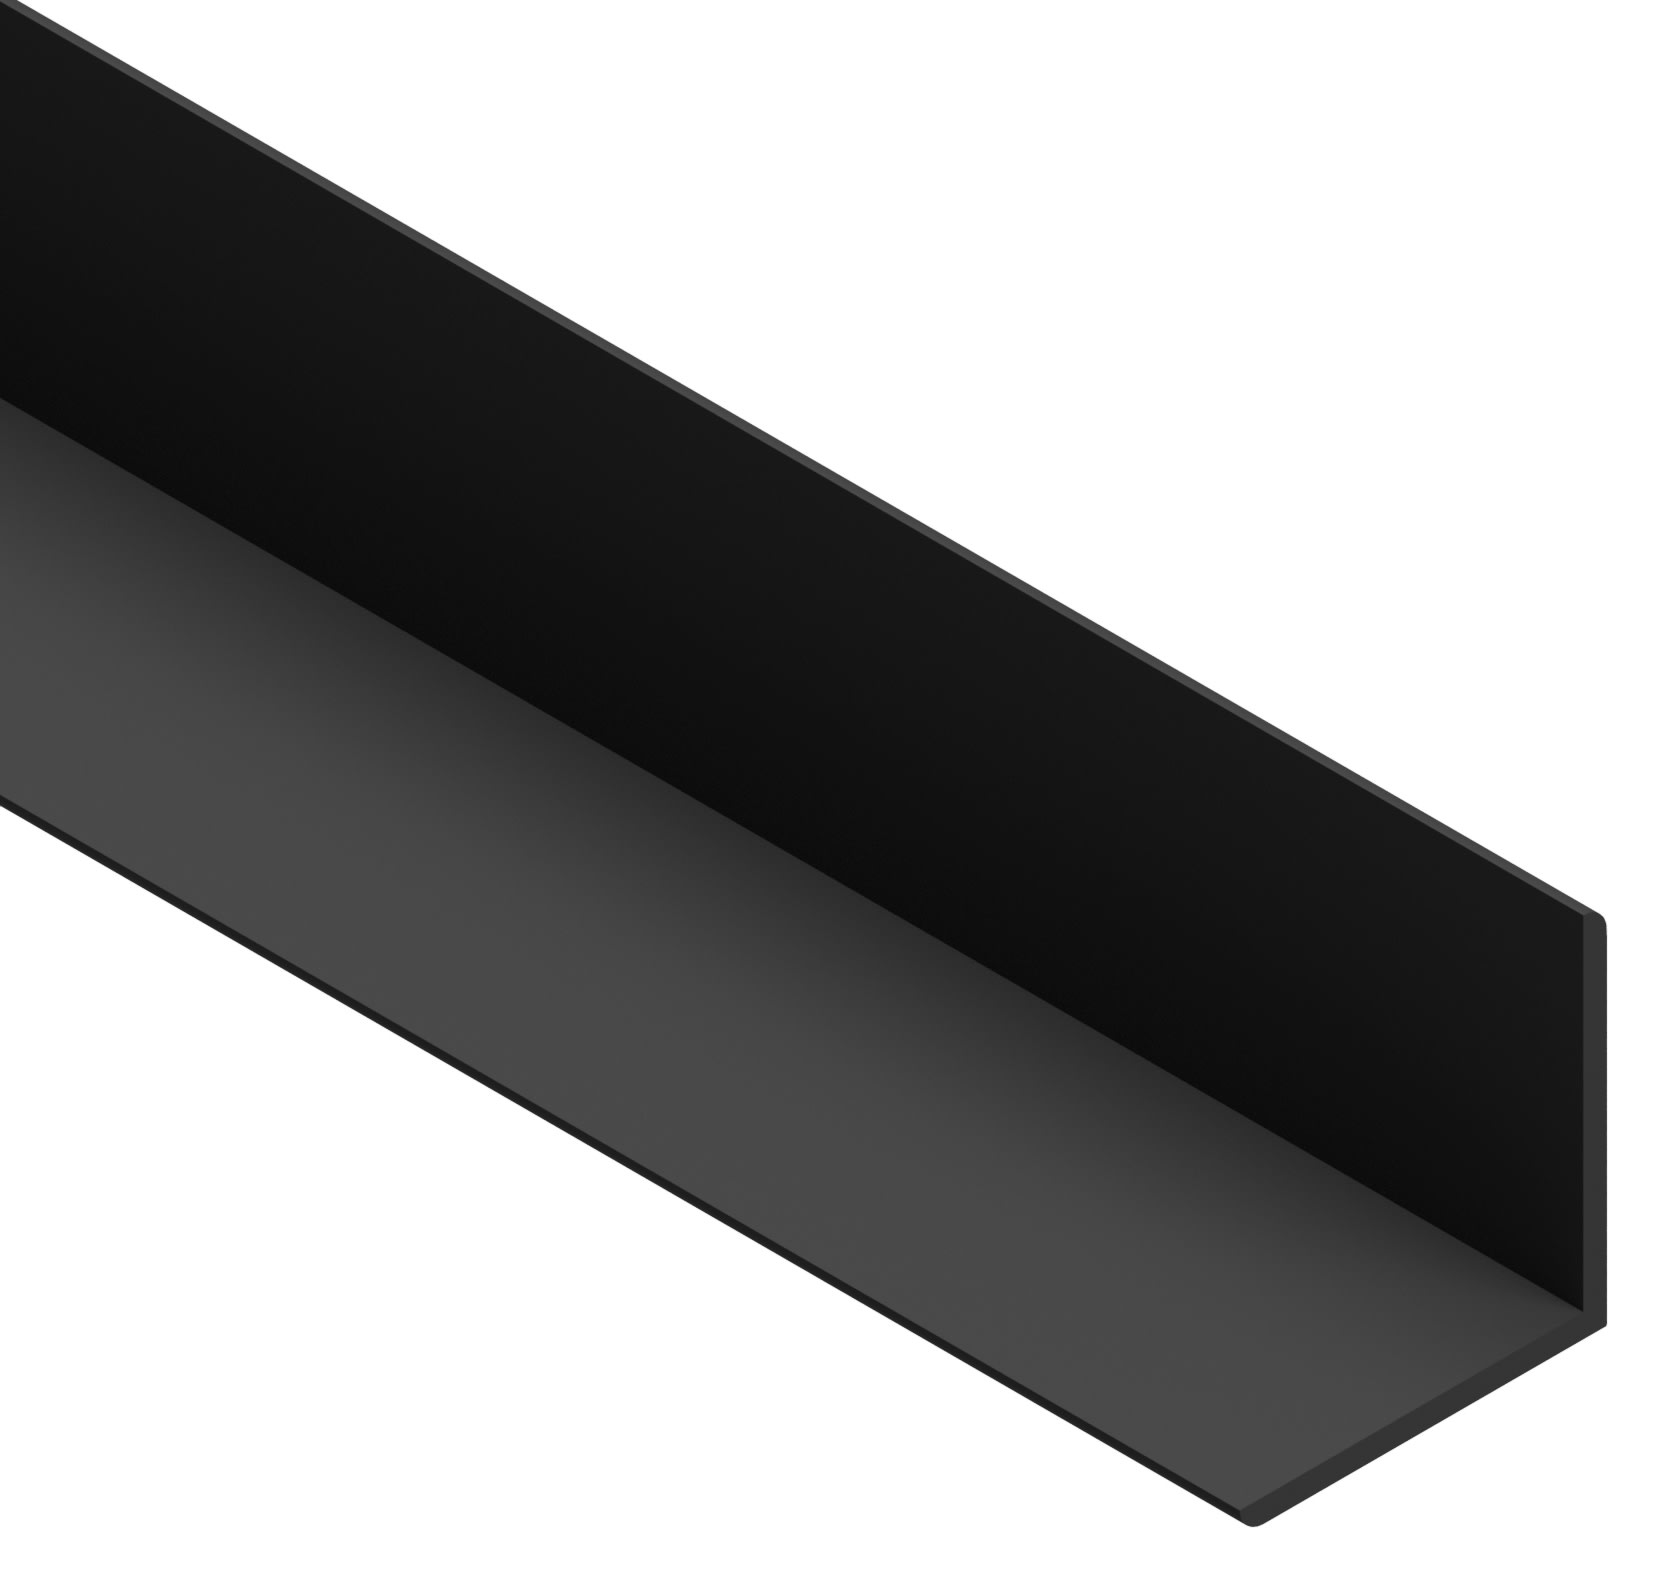 Cheshire Mouldings Black PVC Angle - 18x18x2400mm